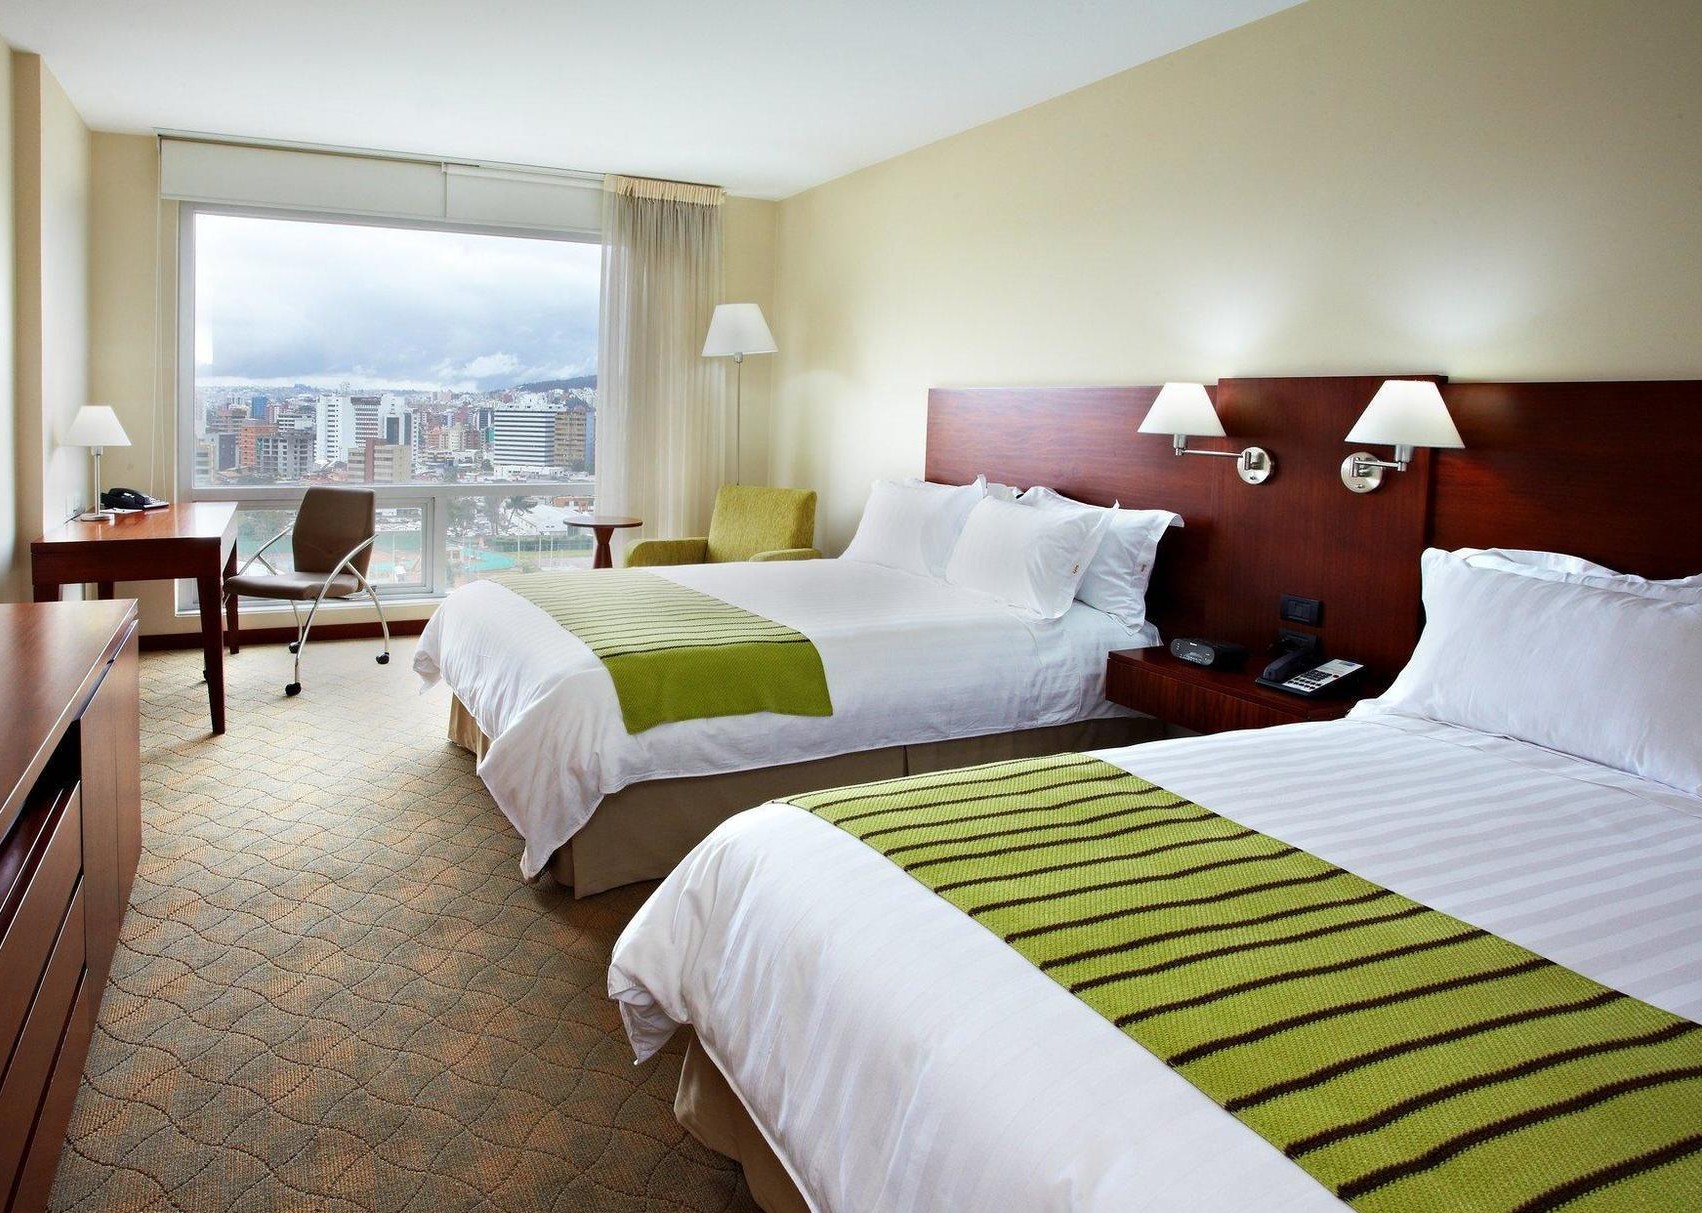 Holiday Inn Express Quito